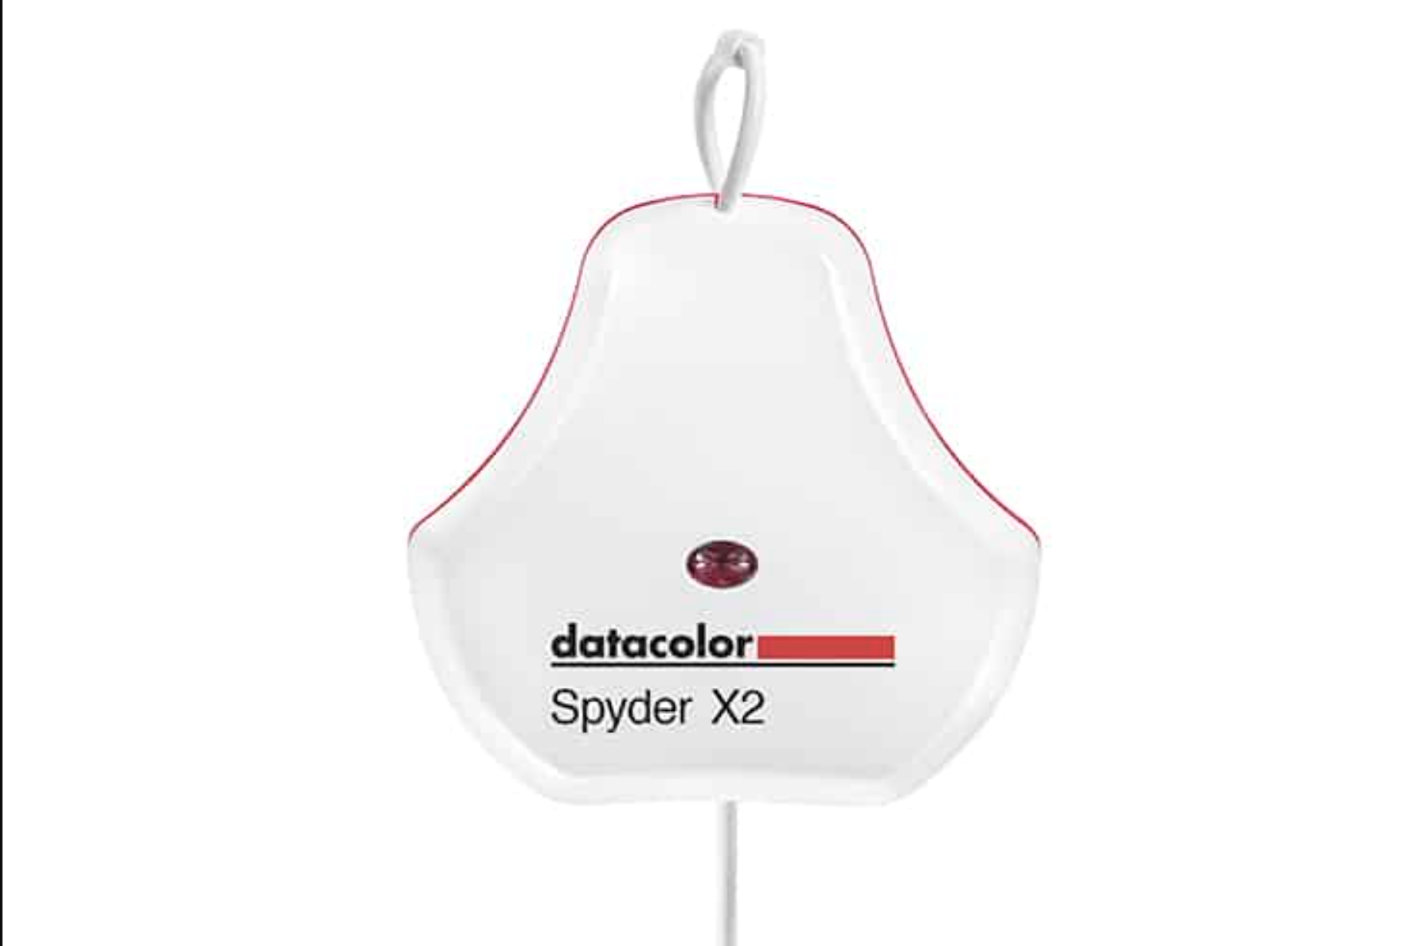 New Spyder X2 Print Studio and Spyder X2 Photo Studio kits from Datacolor